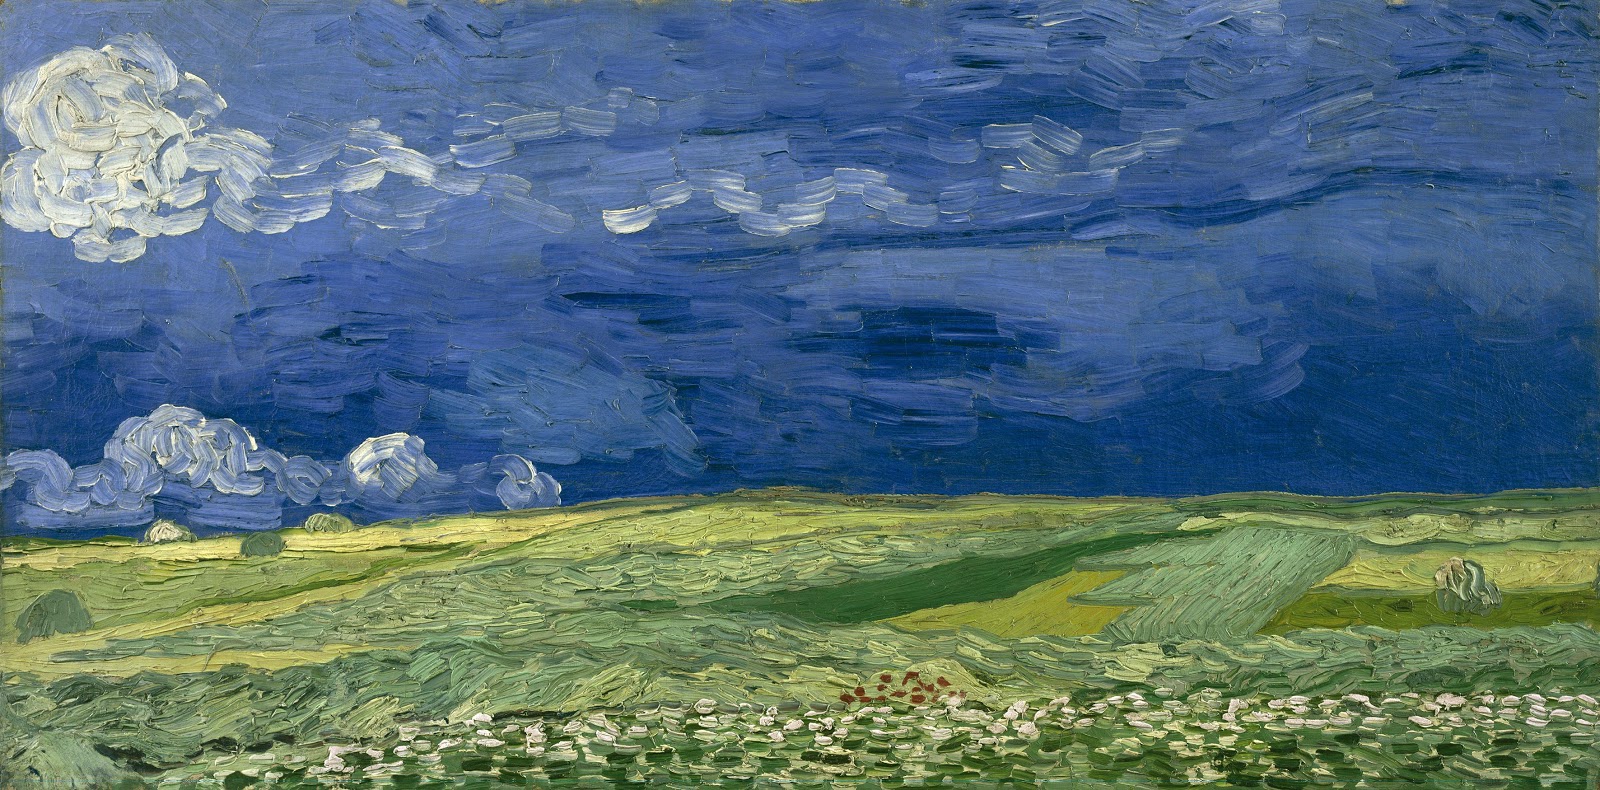 Vincent+Van+Gogh-1853-1890 (889).jpg